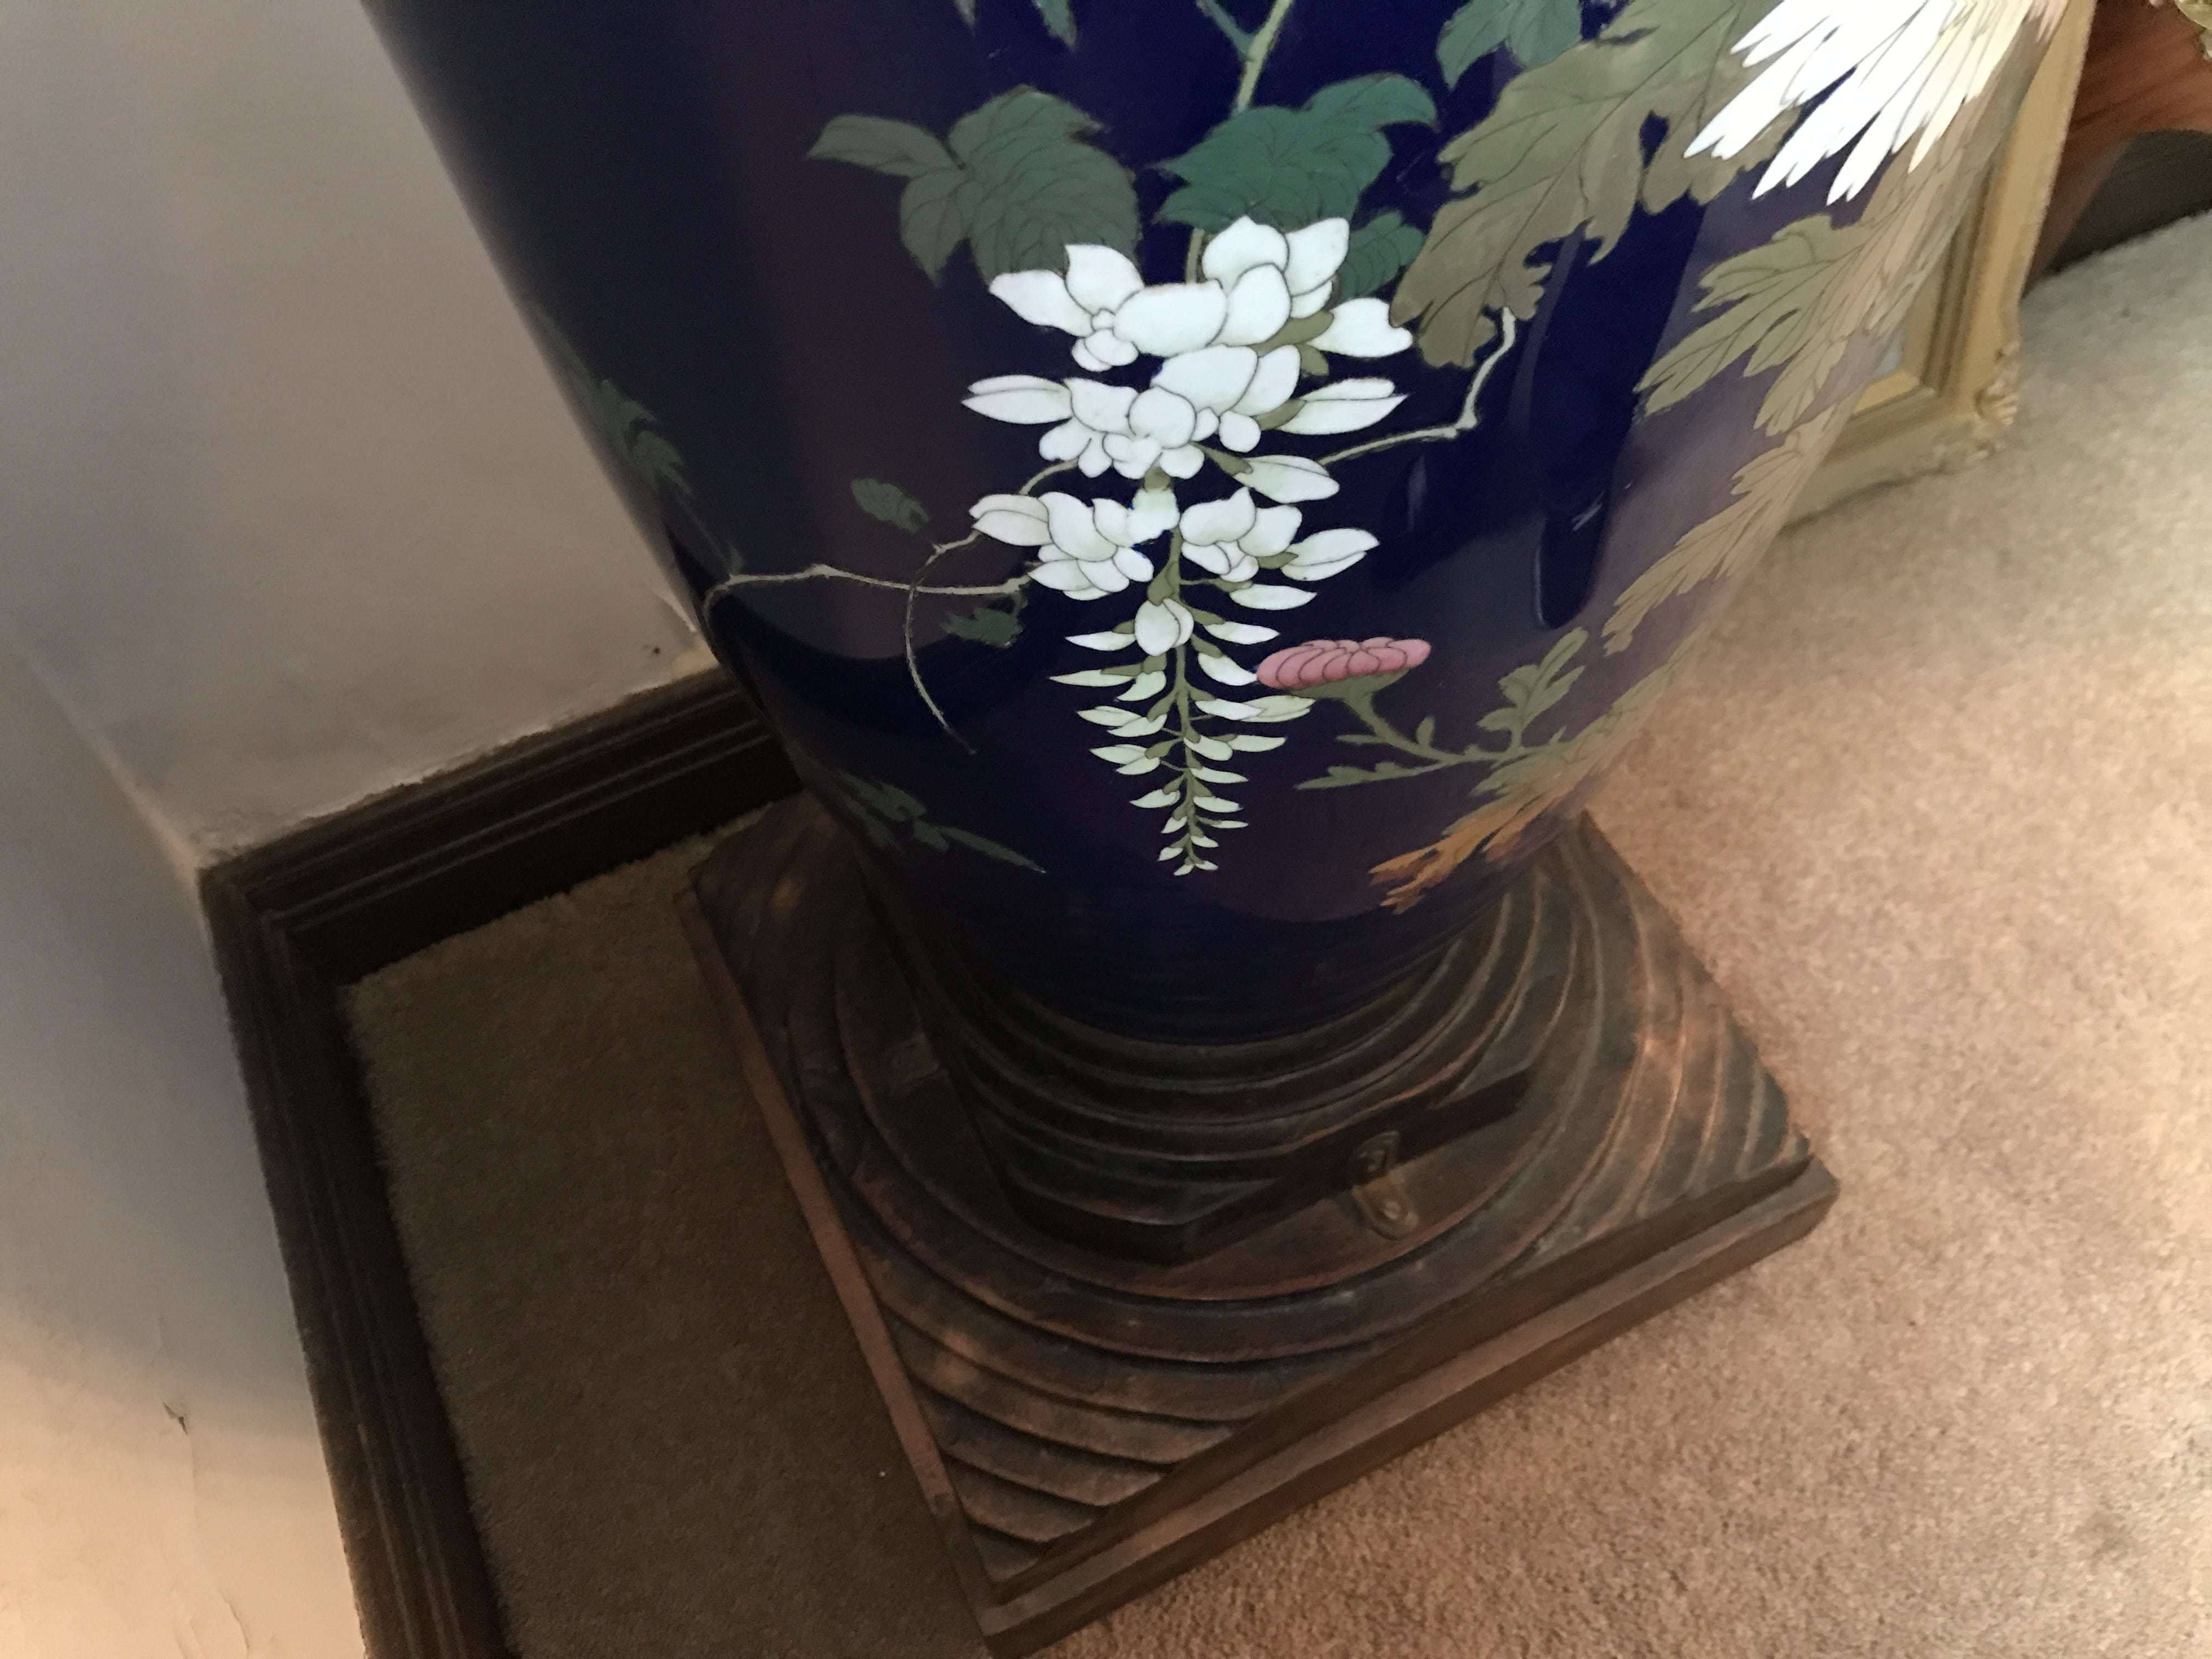 A pair of large Japanese cloisonné vases, Meiji period, 1868-1912